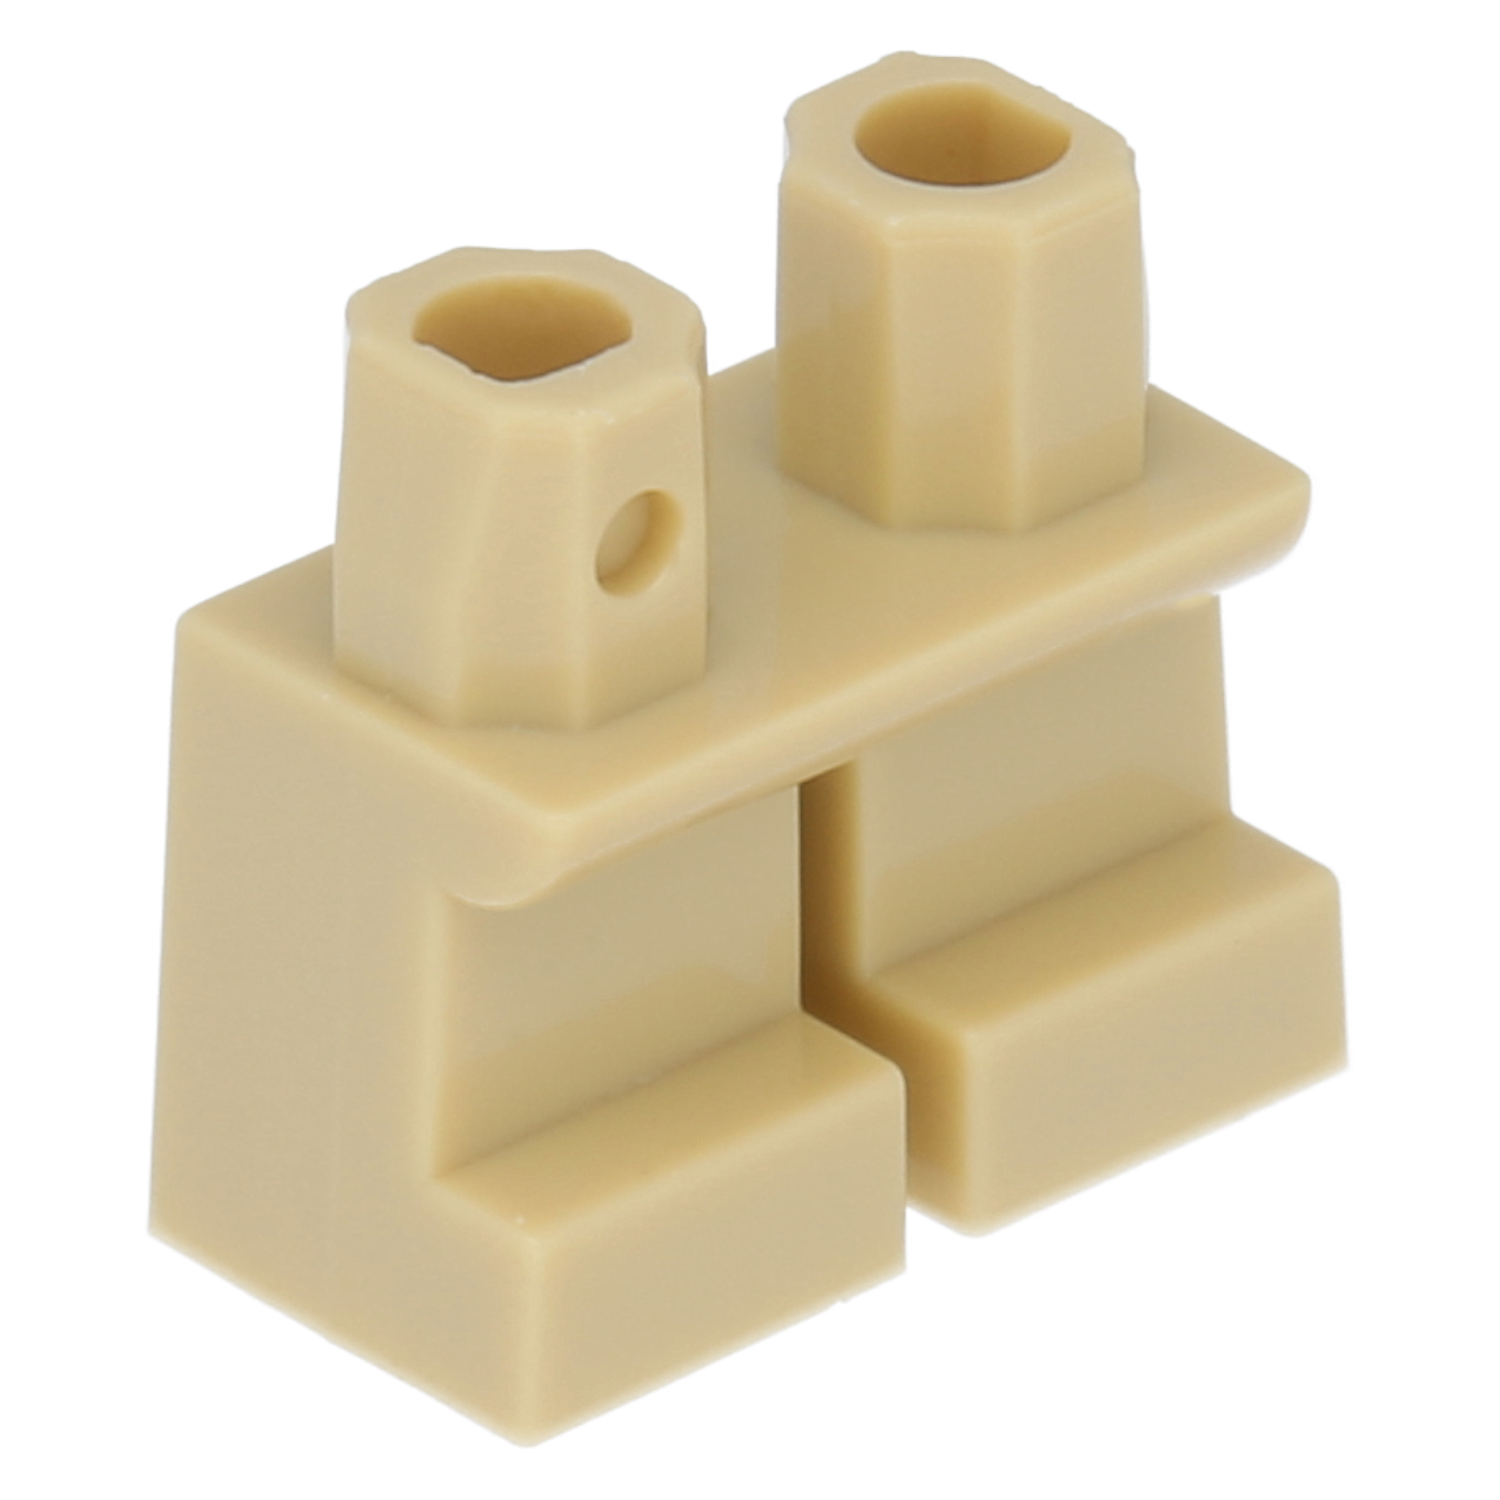 LEGO Minifigures legs & skirts - legs (short)